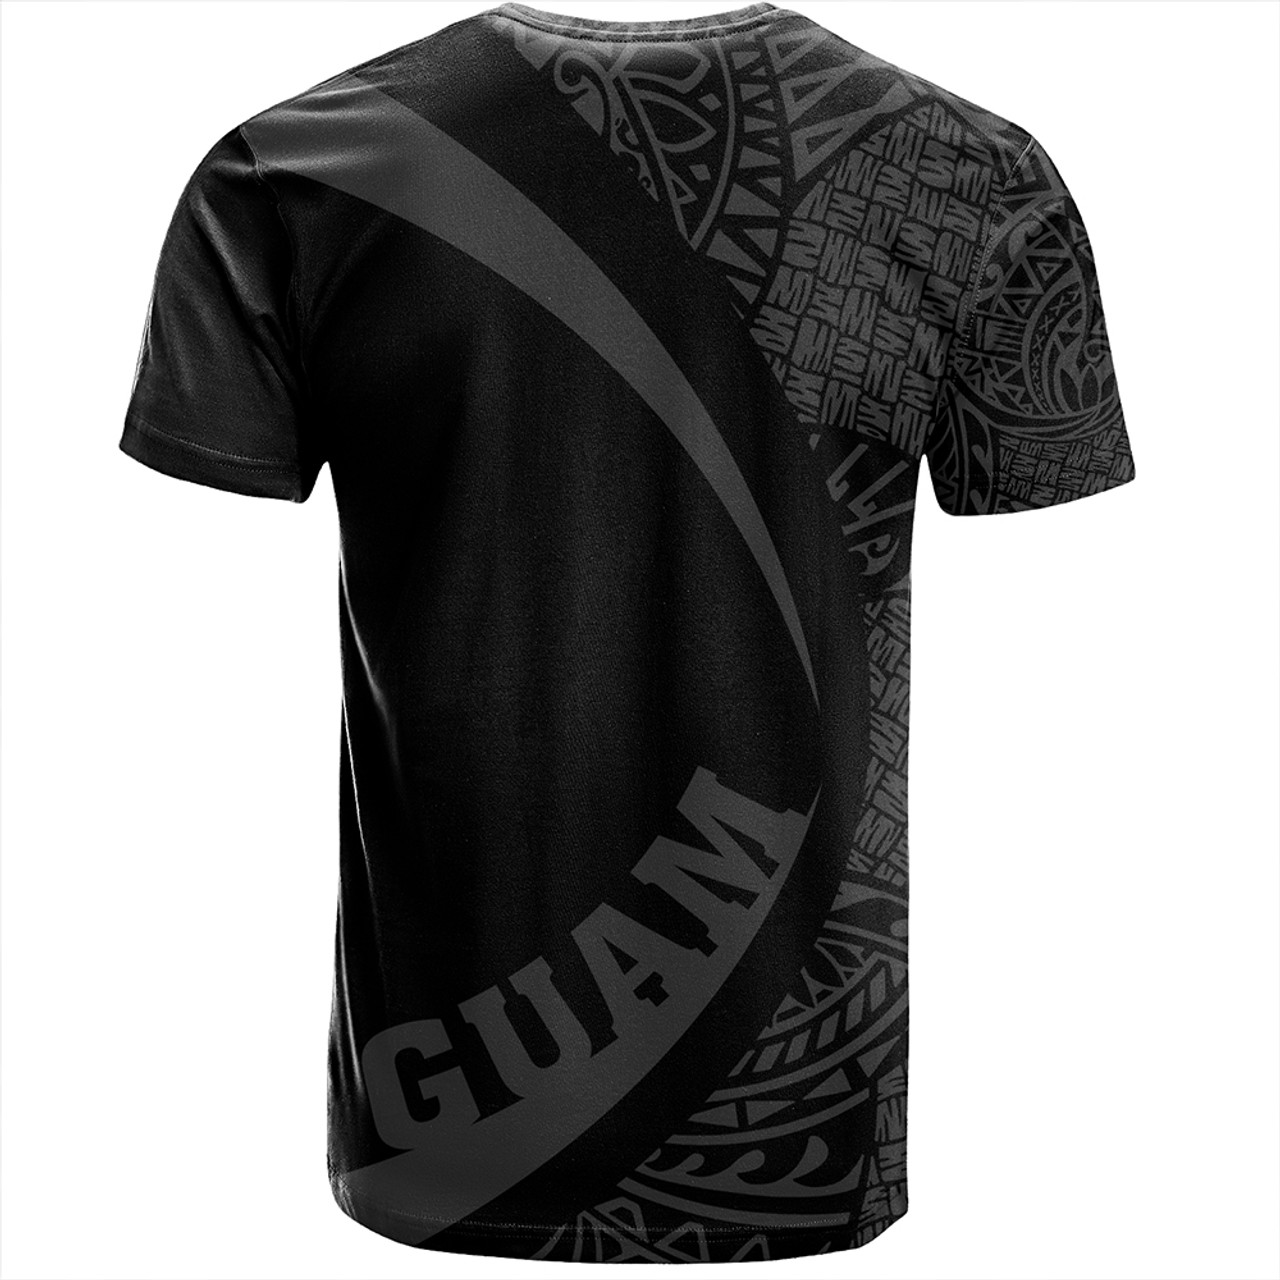 Guam T-Shirt Coat Of Arm Lauhala Gray Circle